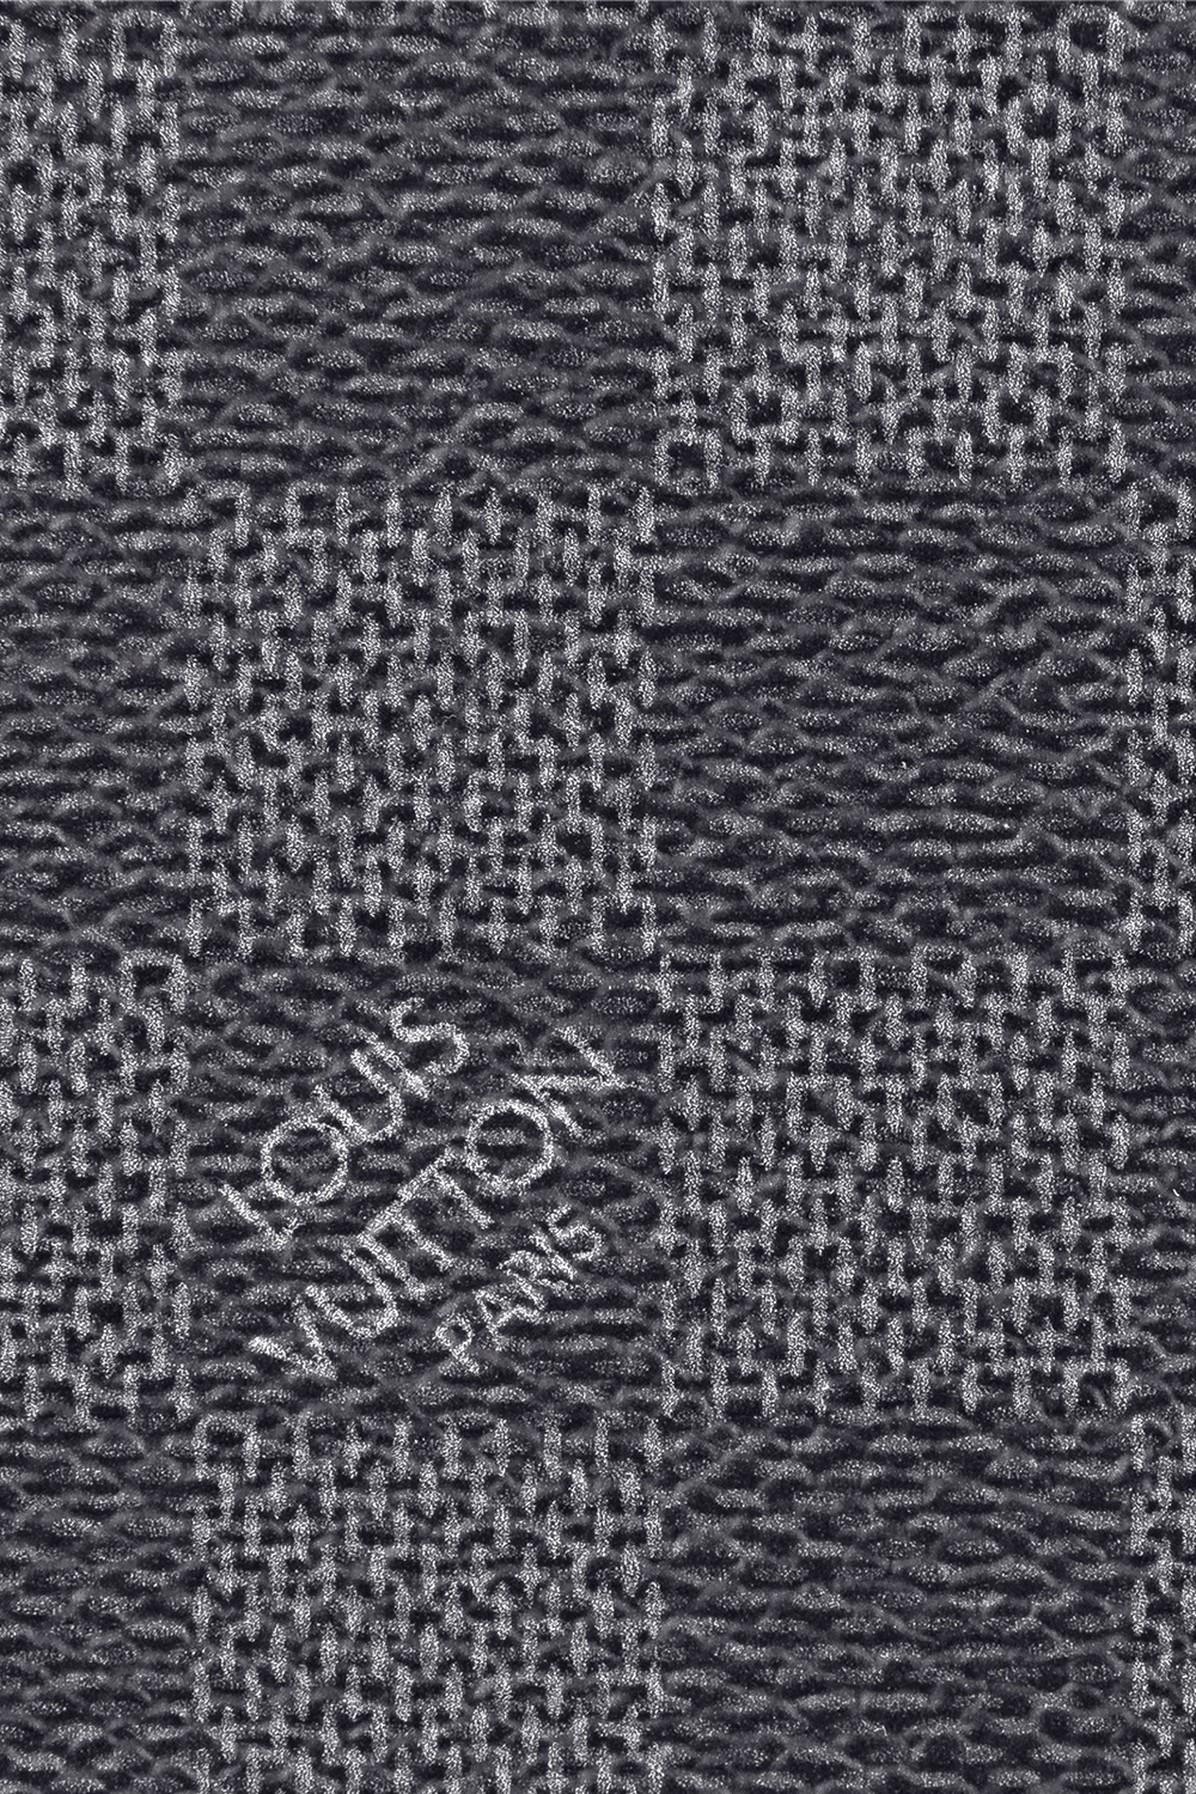 Horizon 55 cloth travel bag Louis Vuitton Multicolour in Cloth